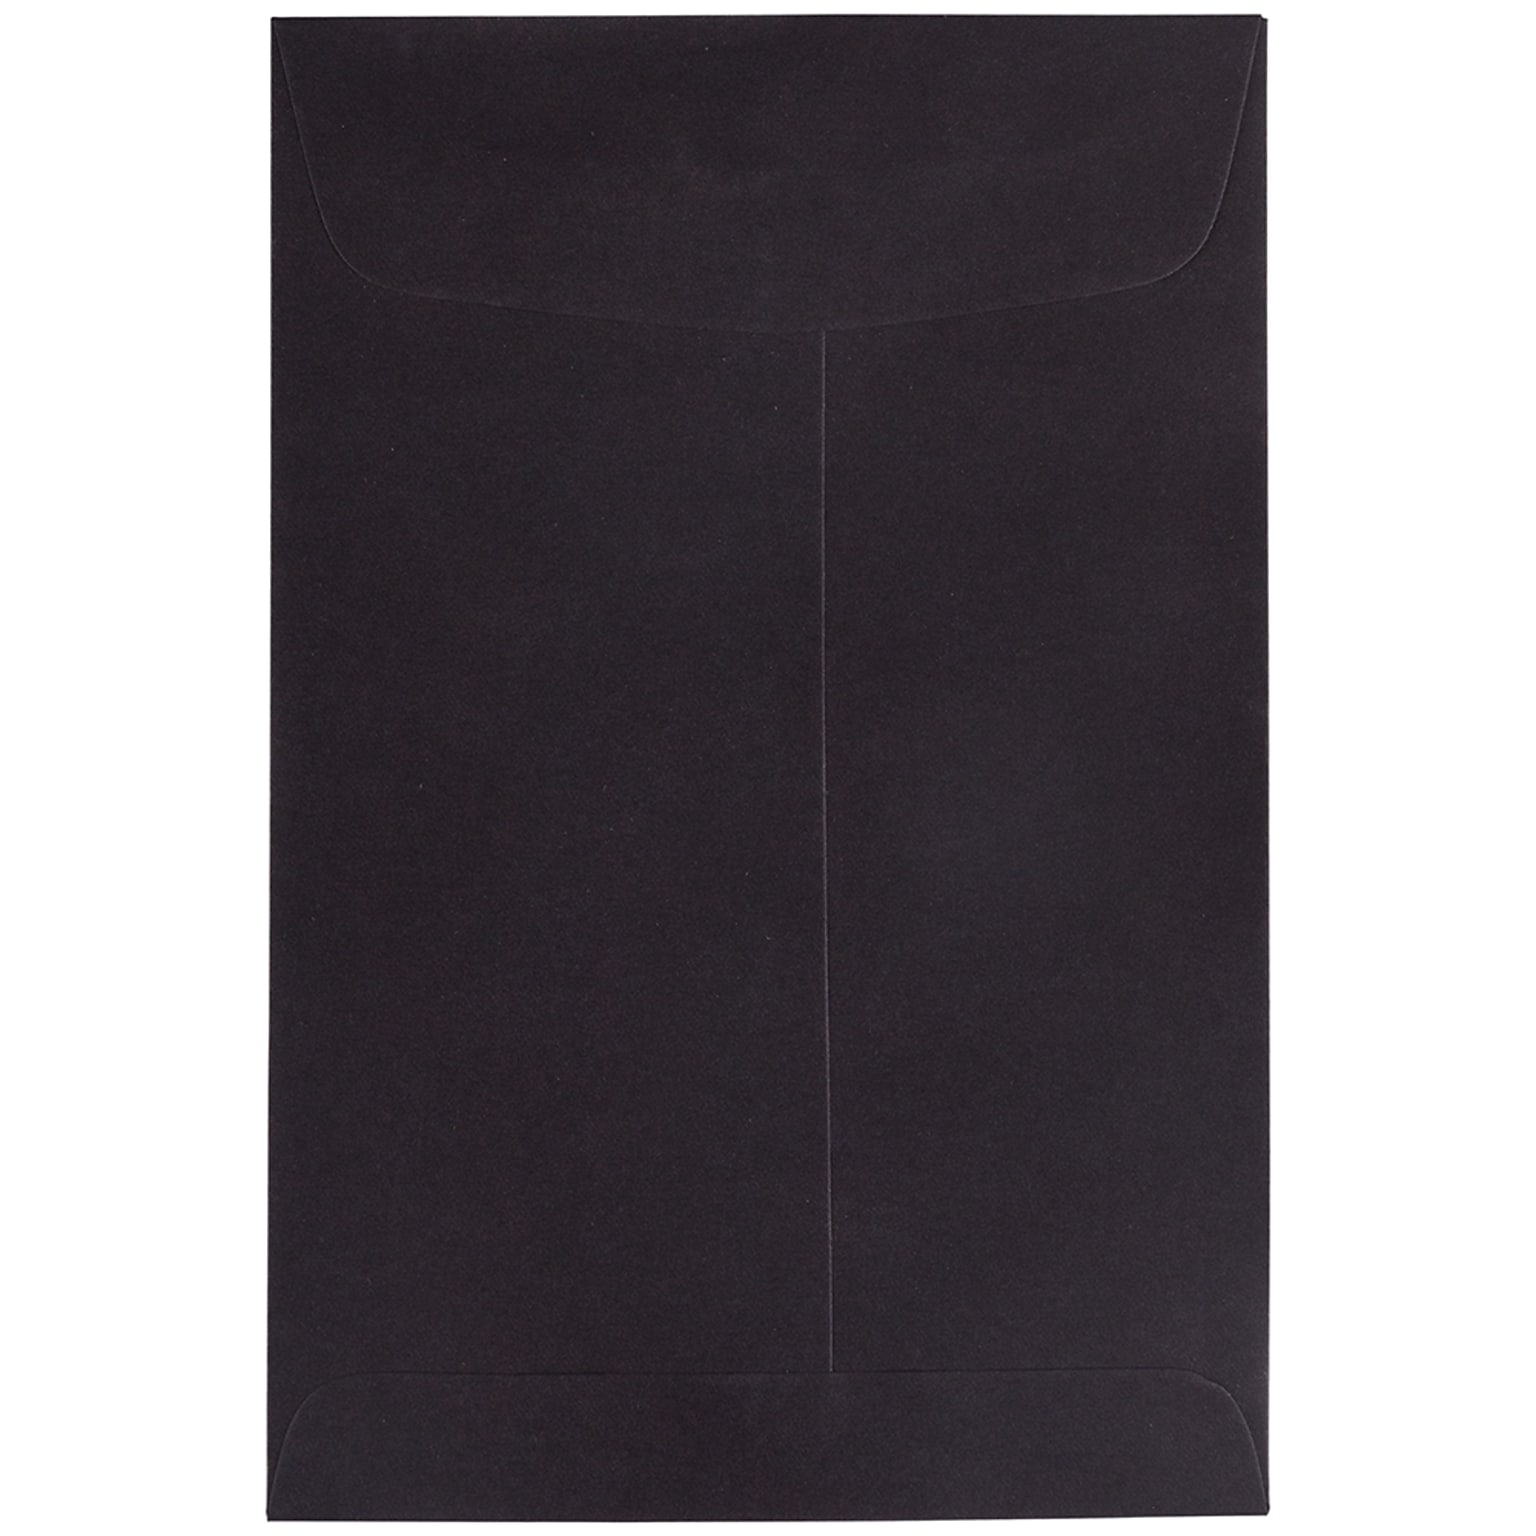 JAM Paper 6 x 9 Open End Catalog Envelopes, Black, 50/Pack (88095i)